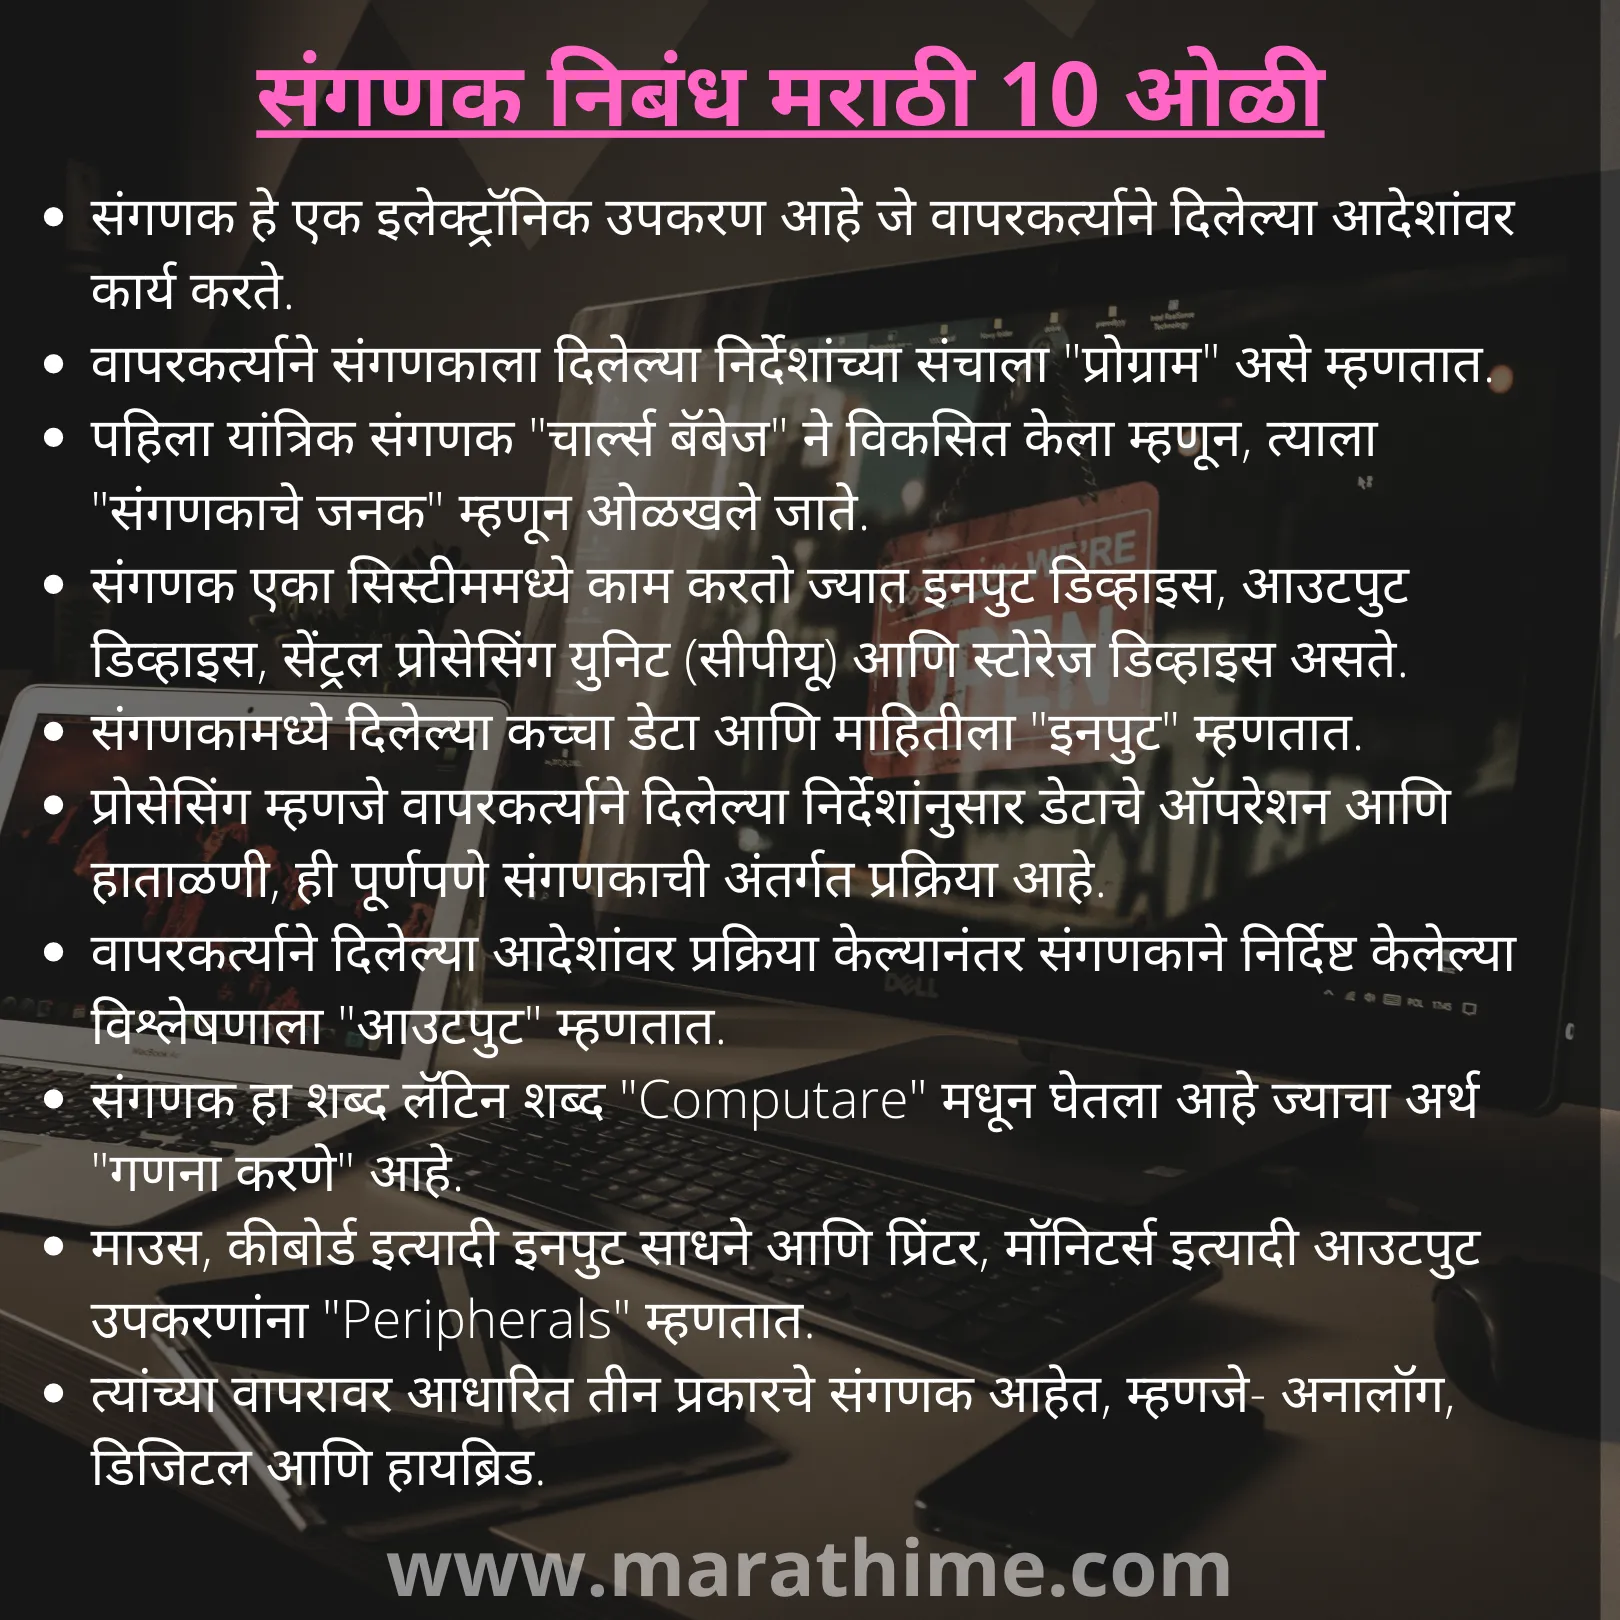 संगणक निबंध मराठी 10 ओळी-10 Lines on Computer in Marathi 1